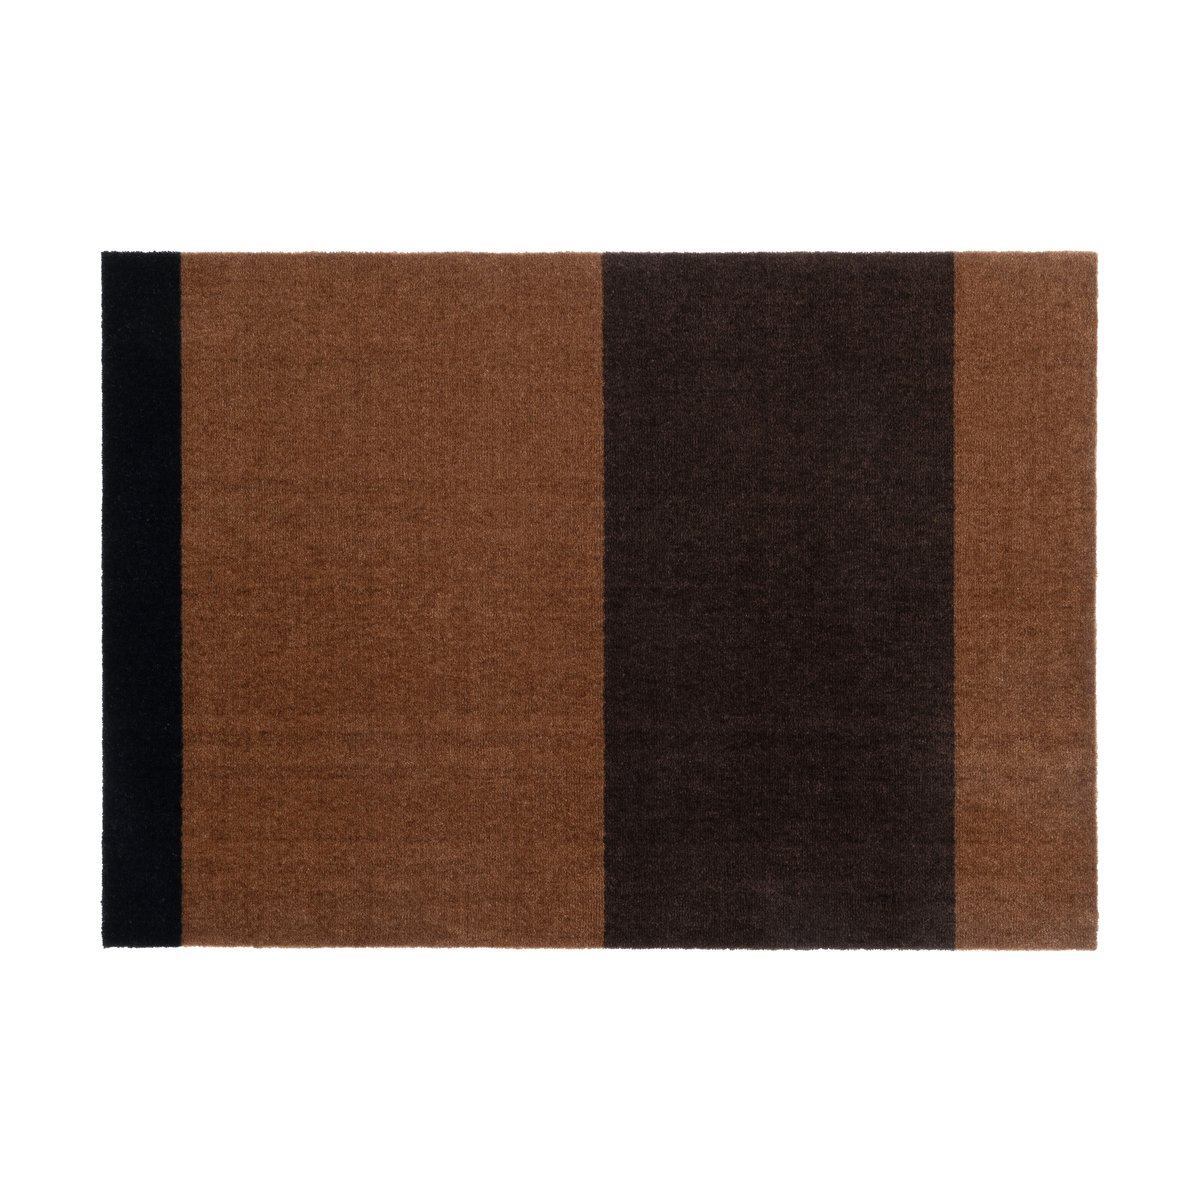 tica copenhagen Stripes by tica, horizontaal, gangmat Cognac-dark brown-black, 90x130 cm